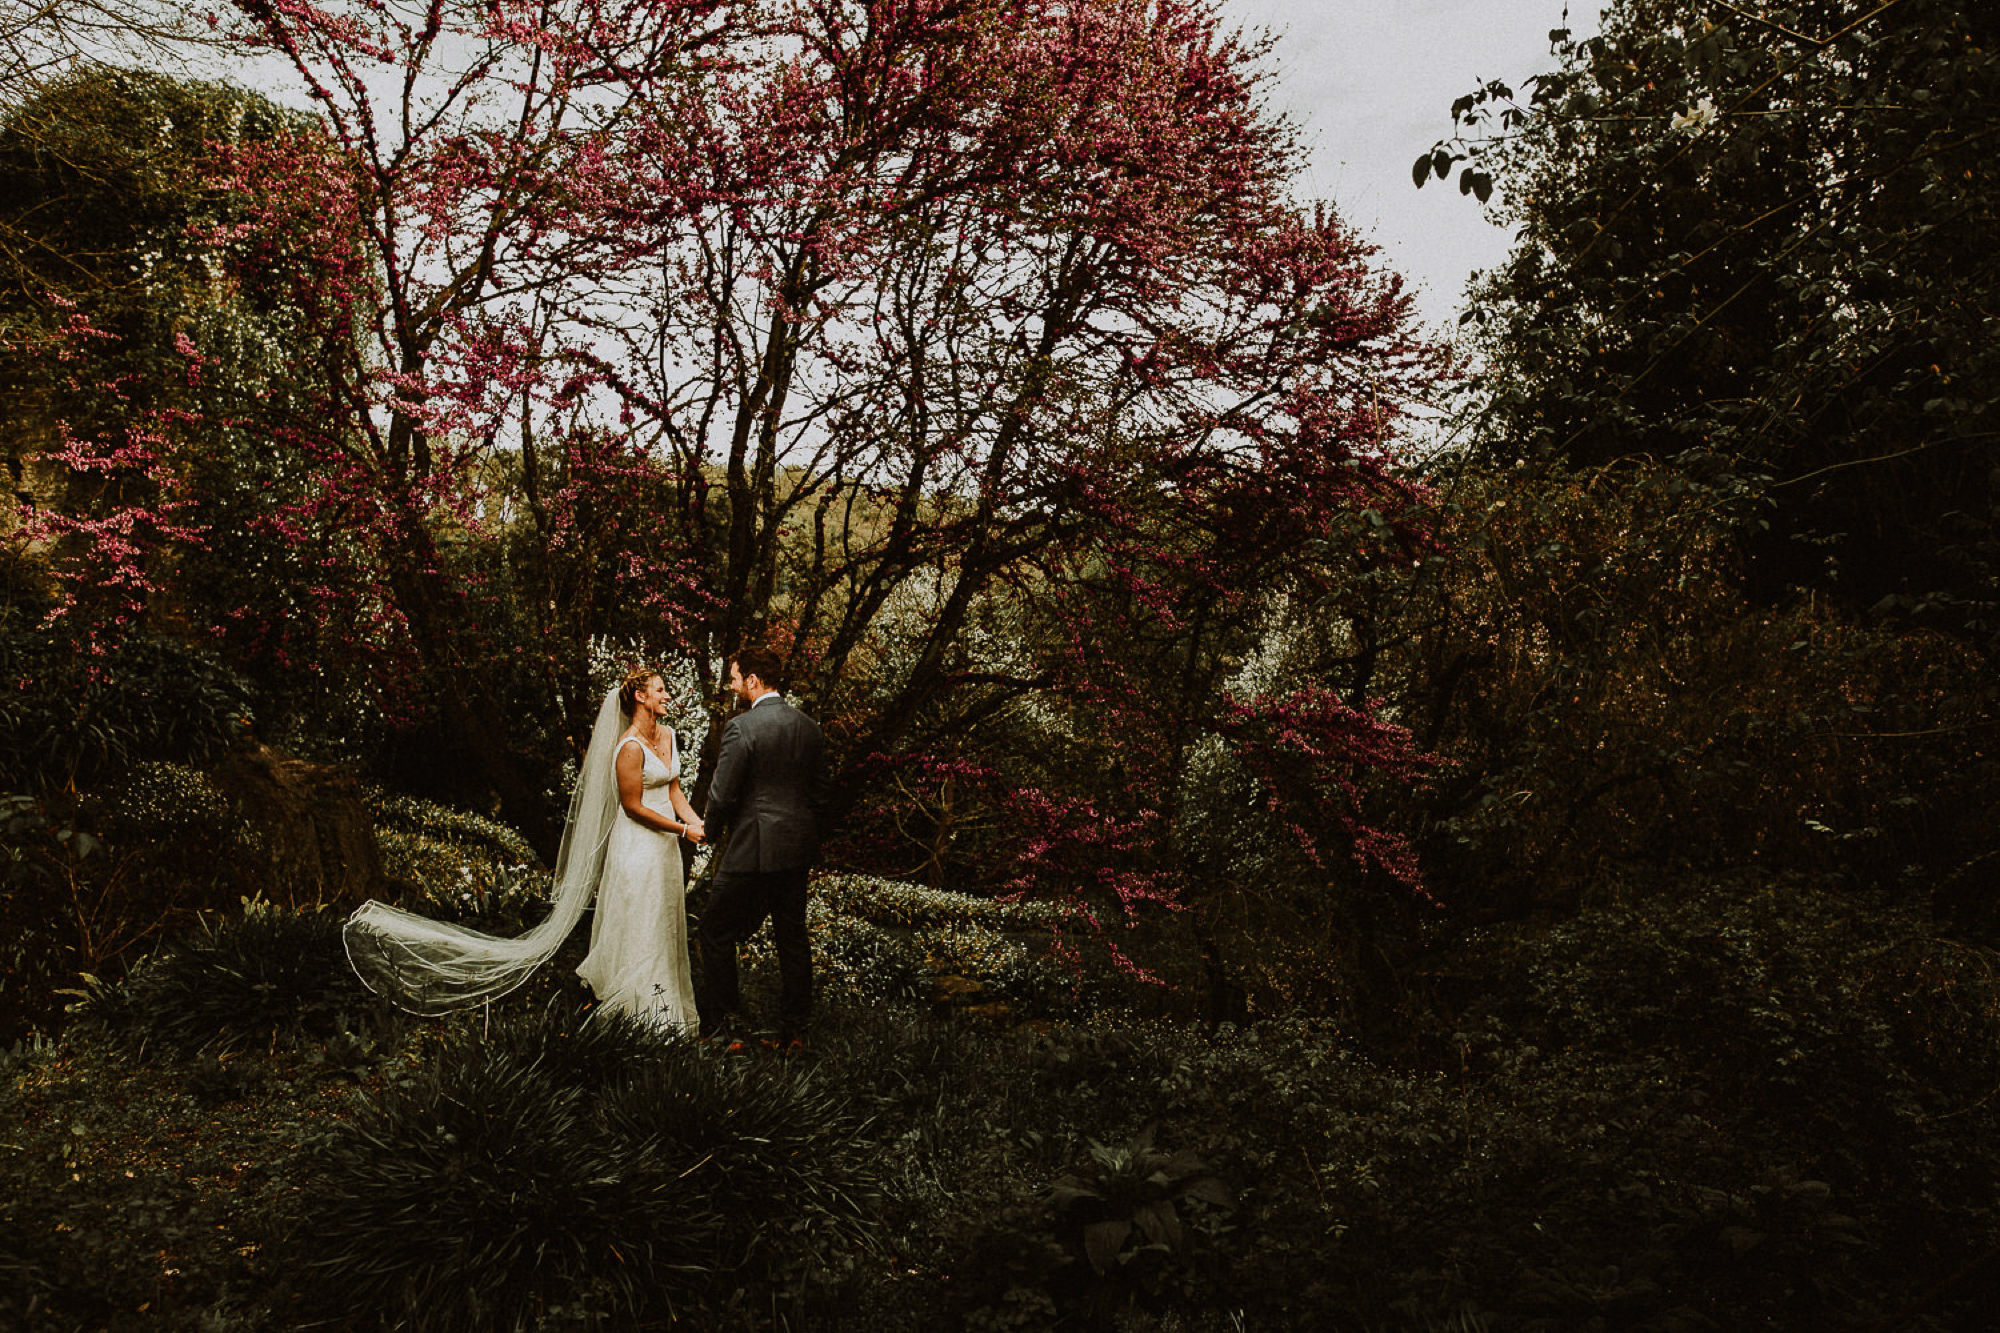 matrimonio intimo roma villa giardino botanico migliore fotografo massaro